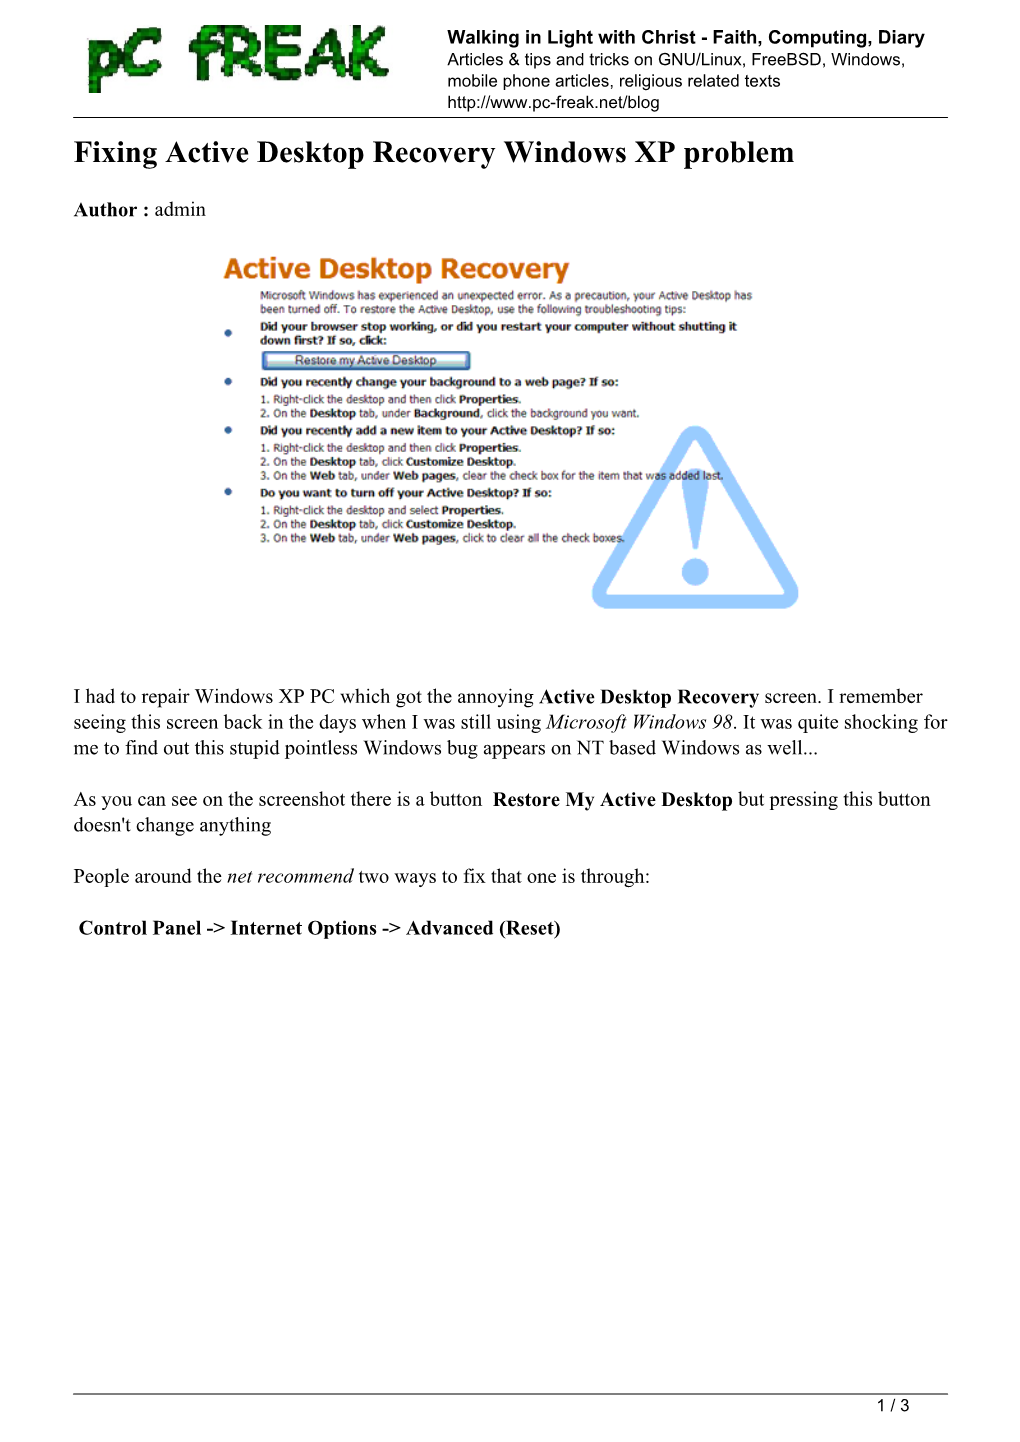 Fixing Active Desktop Recovery Windows XP Problem